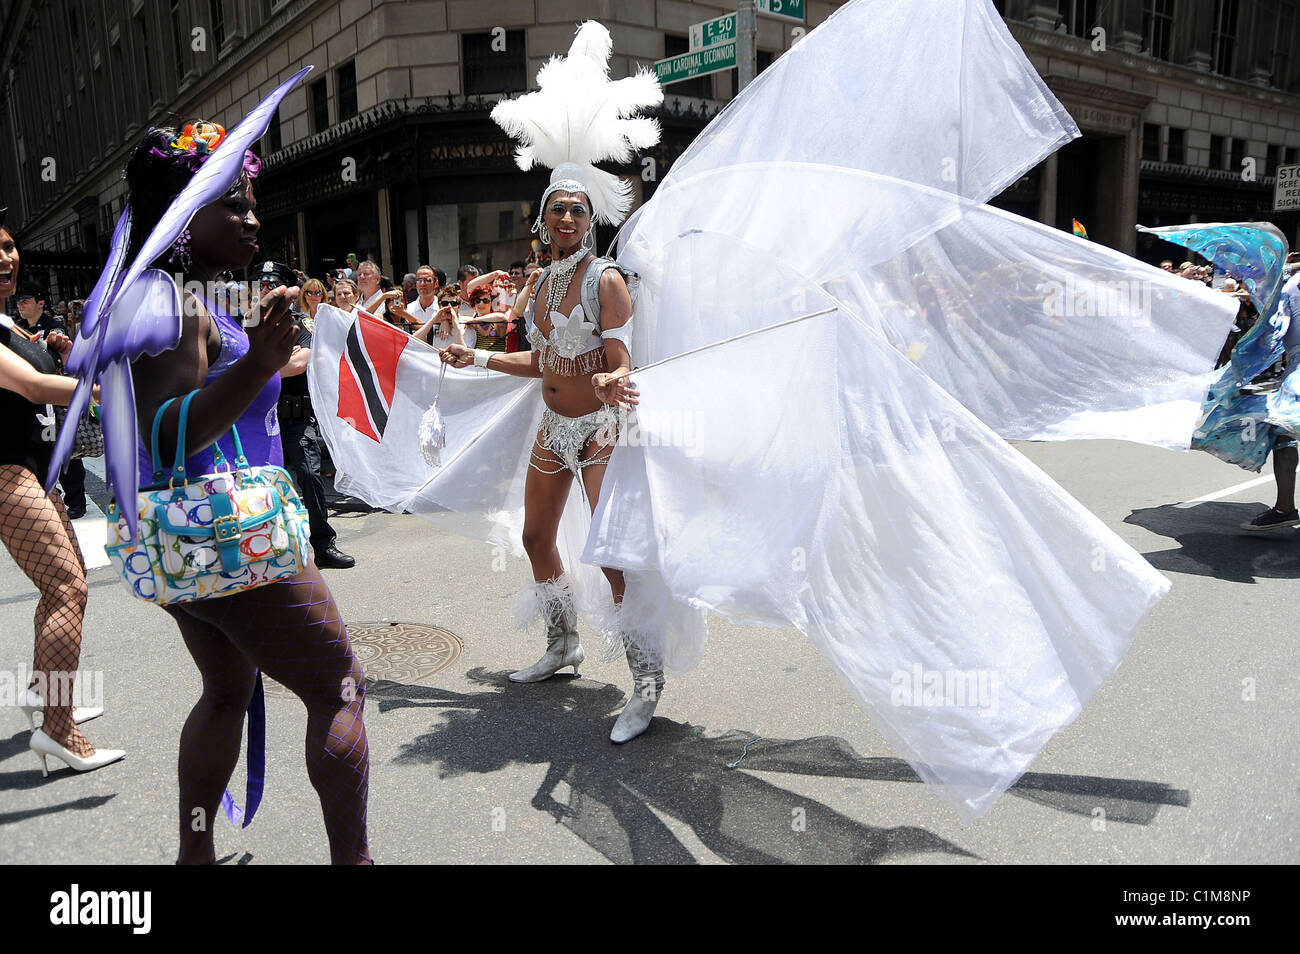 2009 New York City Gay Pride Parade on the Streets of Manhattan  New York City, USA - 28.06.09 Stock Photo